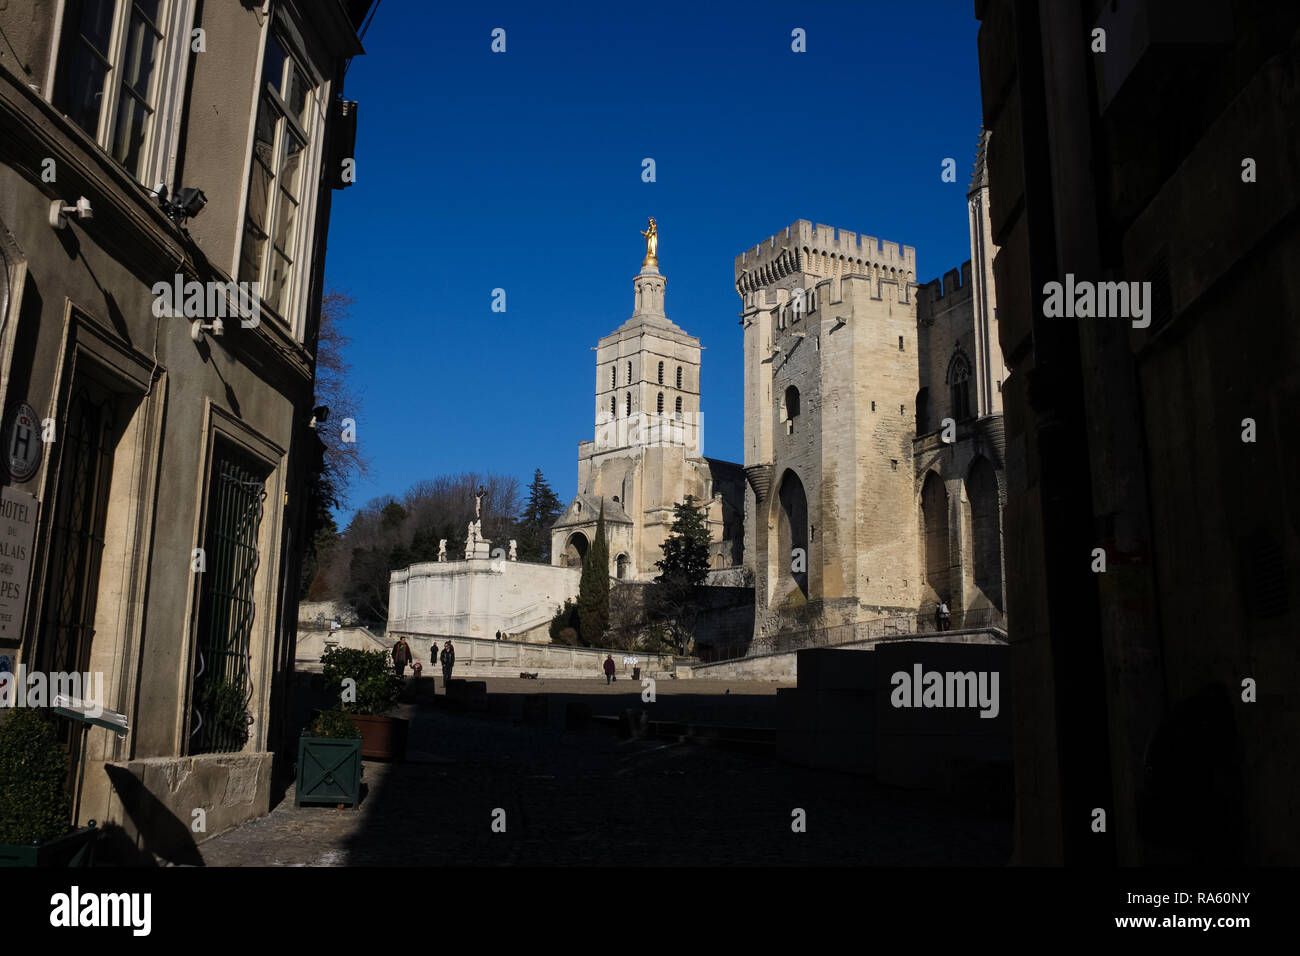 Avignon Papal Palace in Avignon, France. Stock Photo